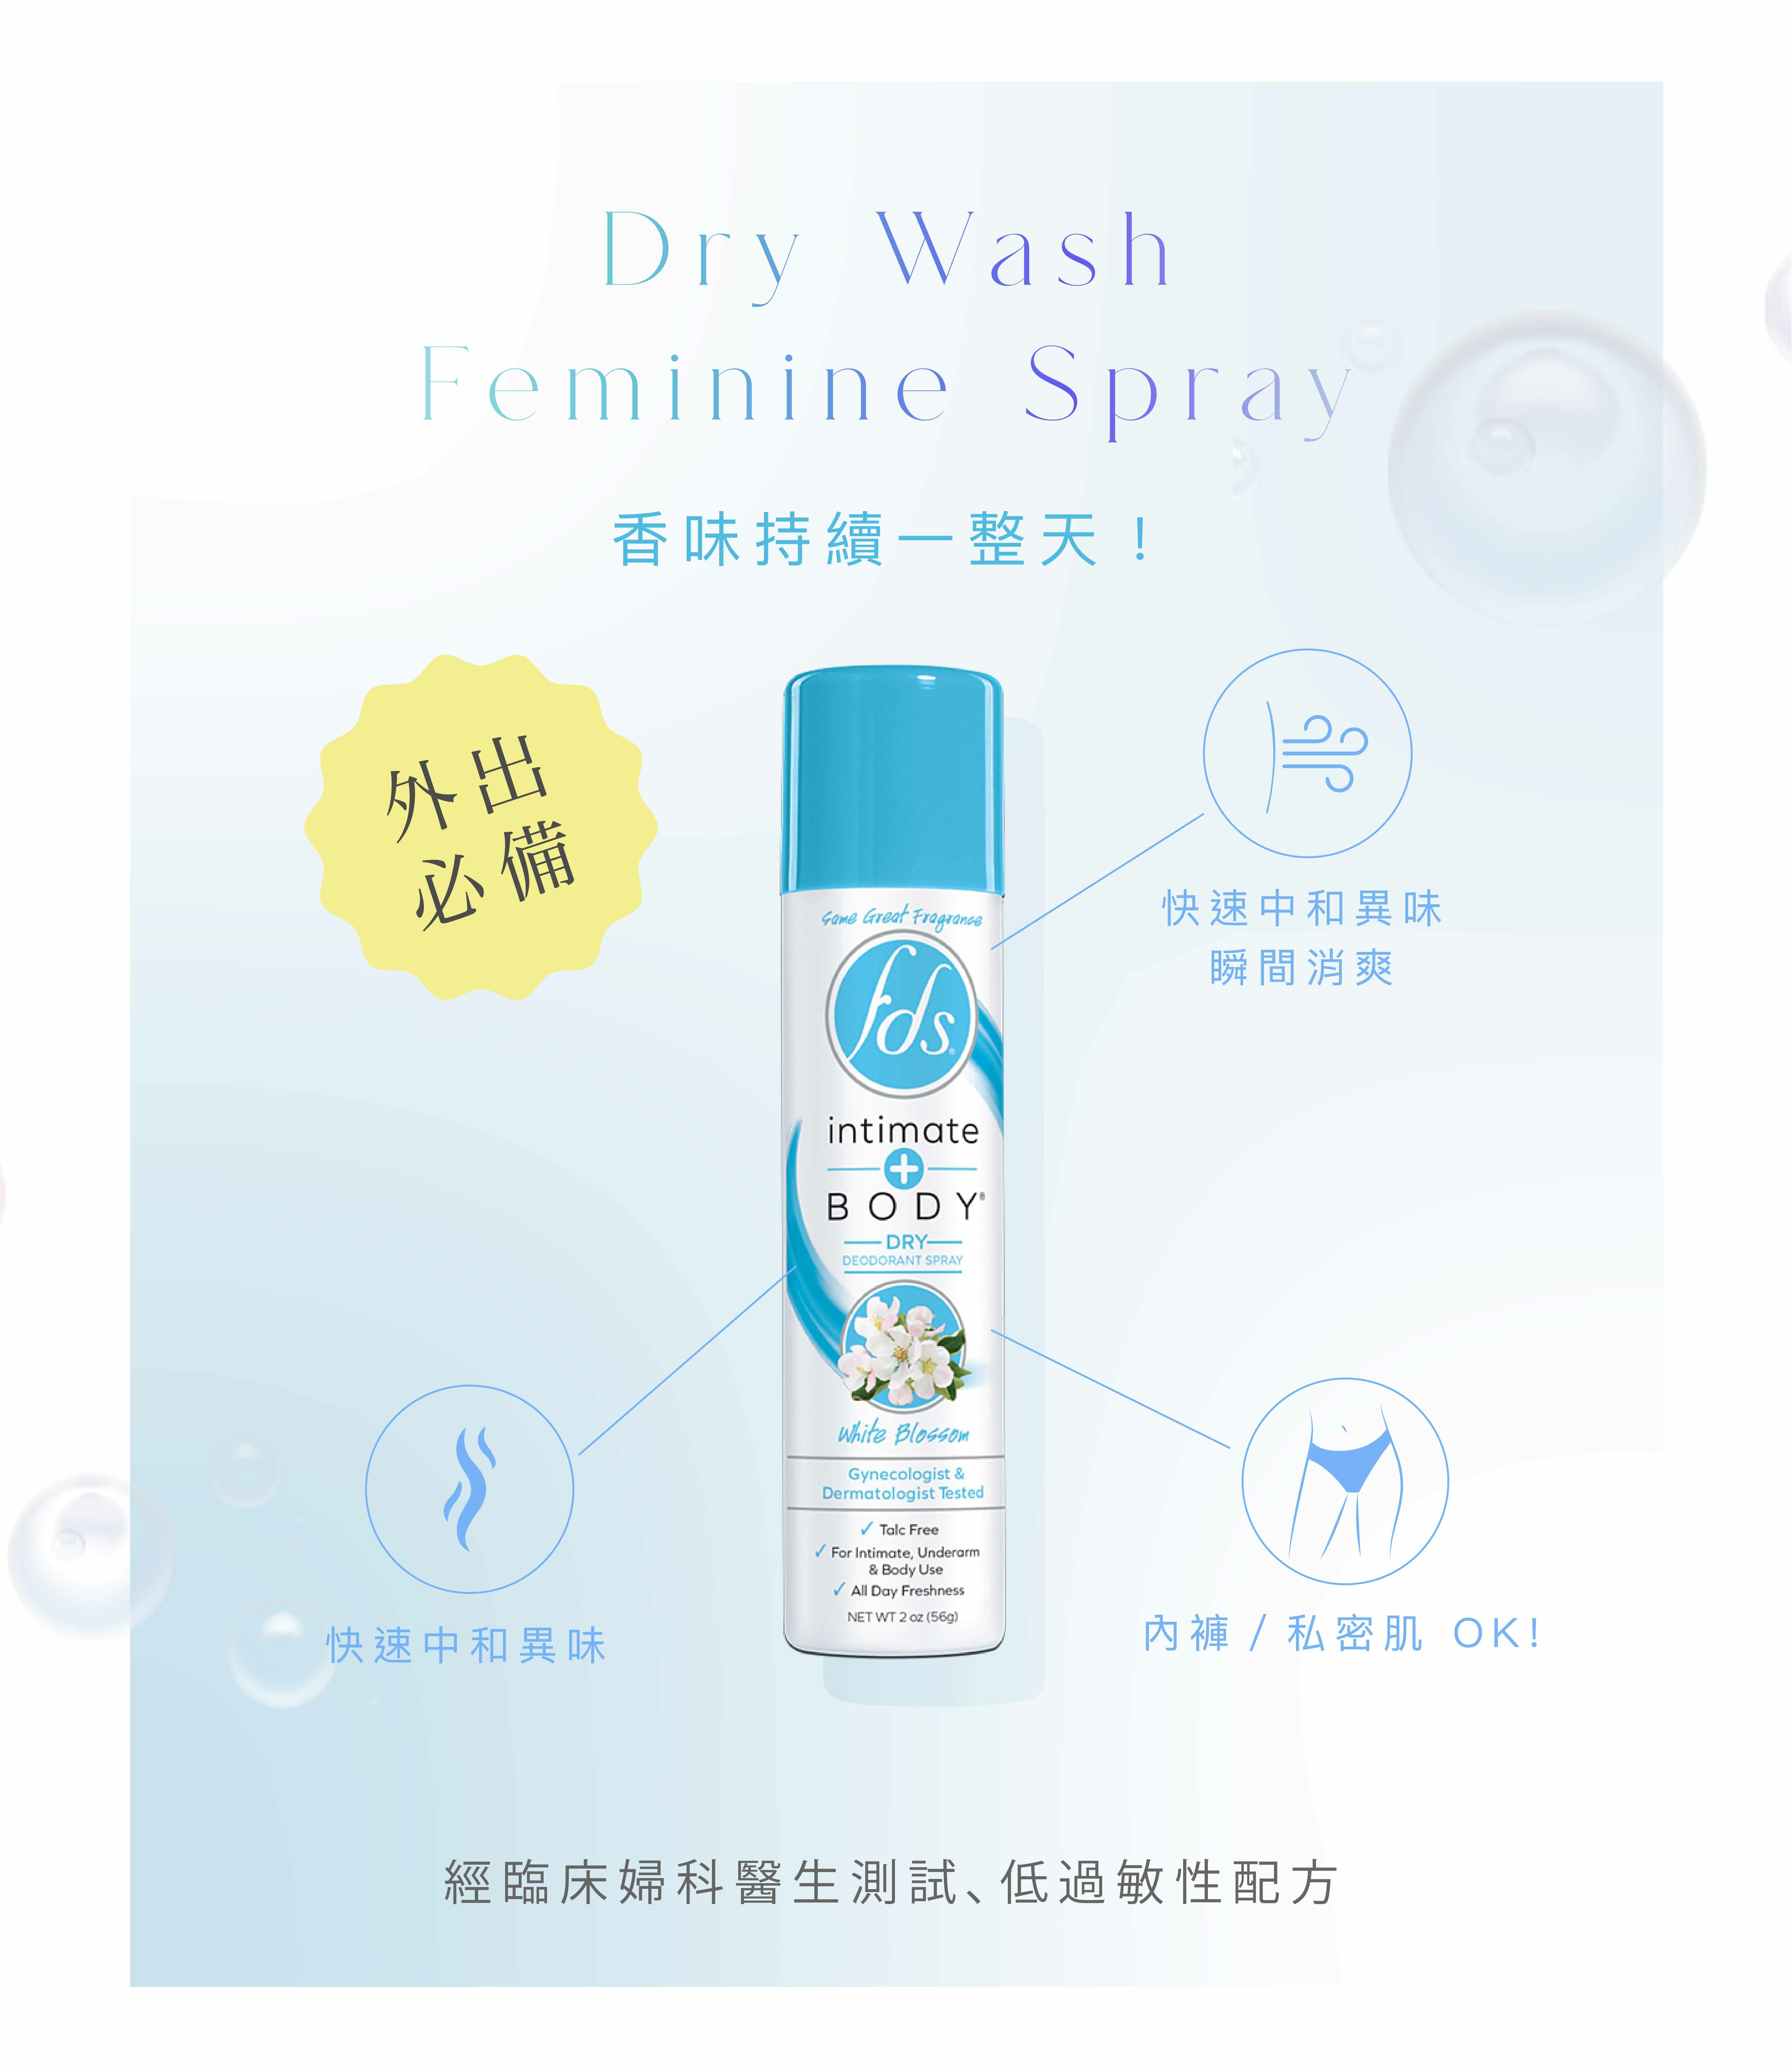 Dry Wash Feminine Spray